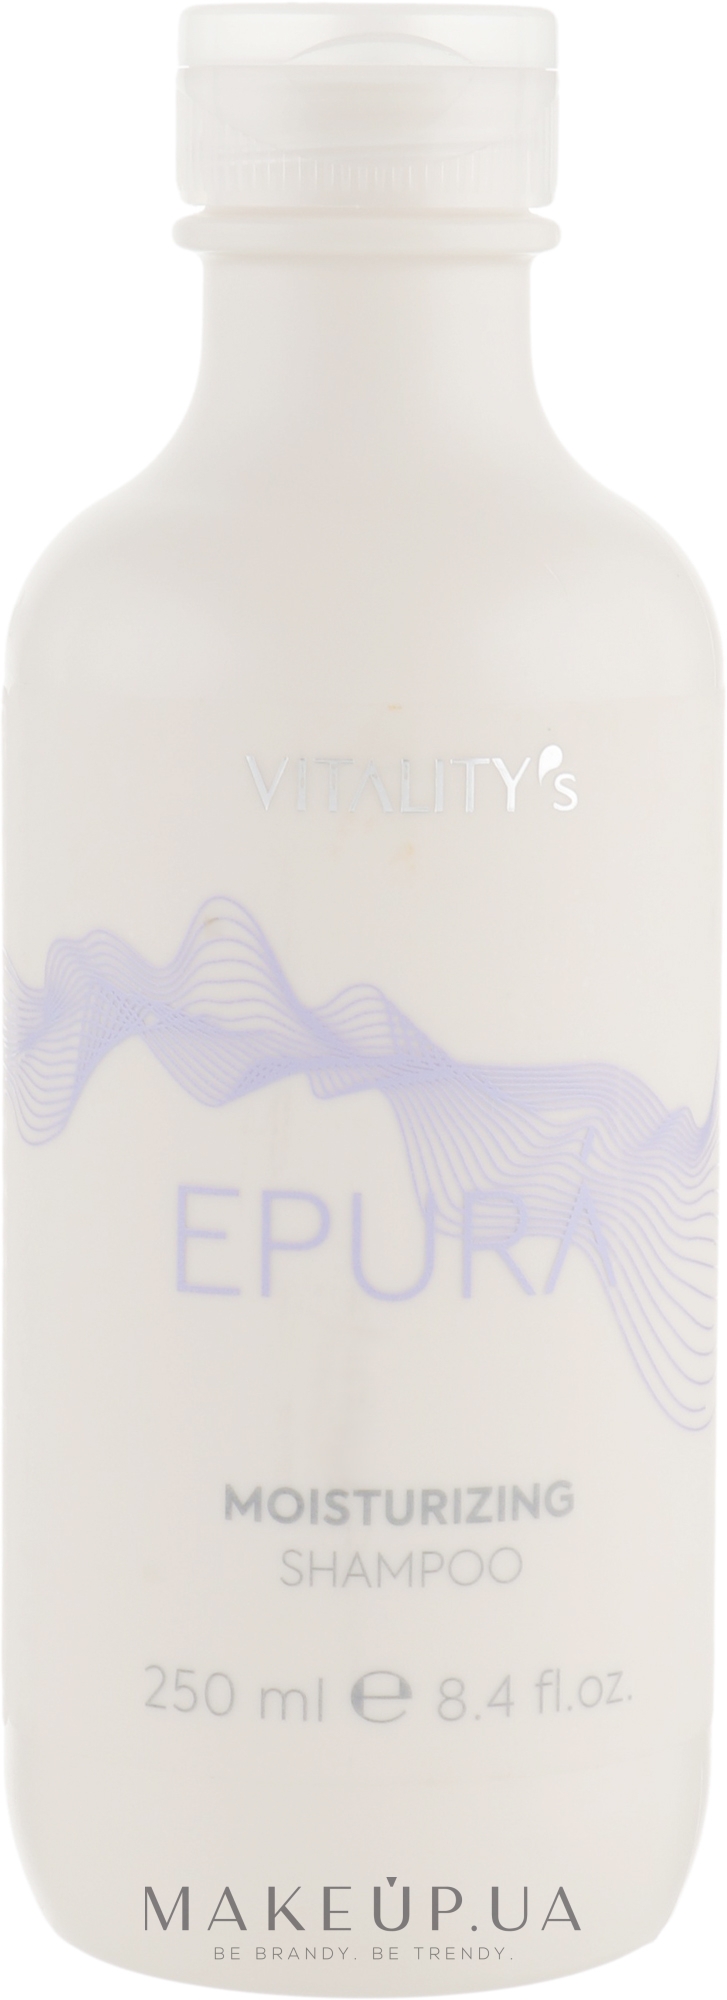 Шампунь зволожувальний - Vitality's Epura Moisturizing Shampoo — фото 250ml